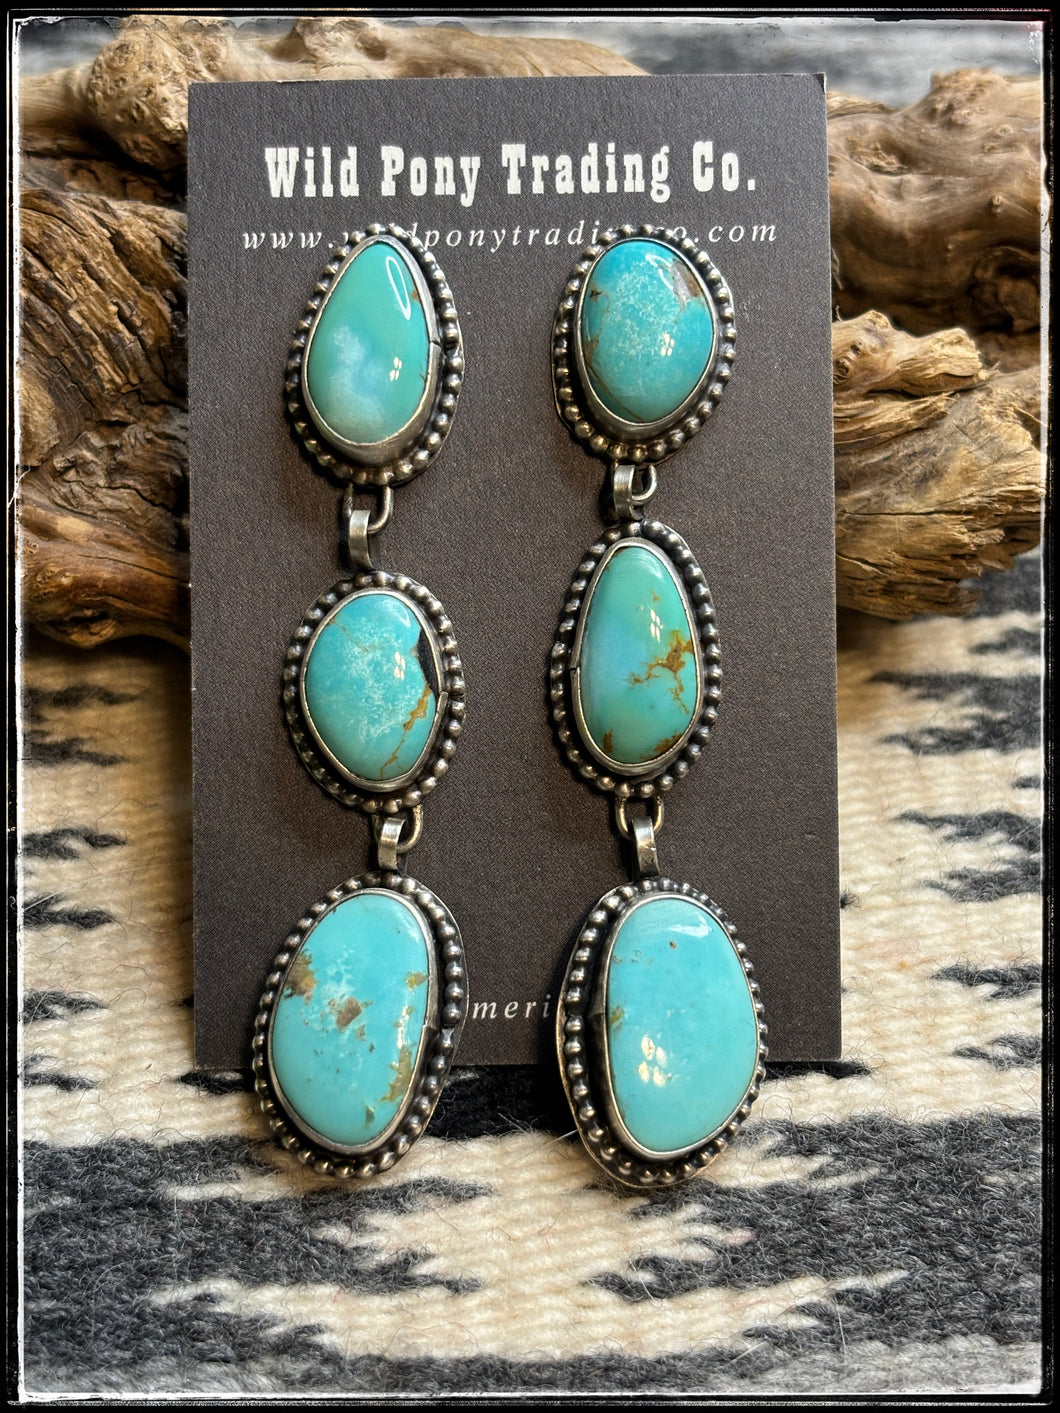 Chris Paul, Navajo silversmith.  Triple turquoise drop earrings with post backs. 